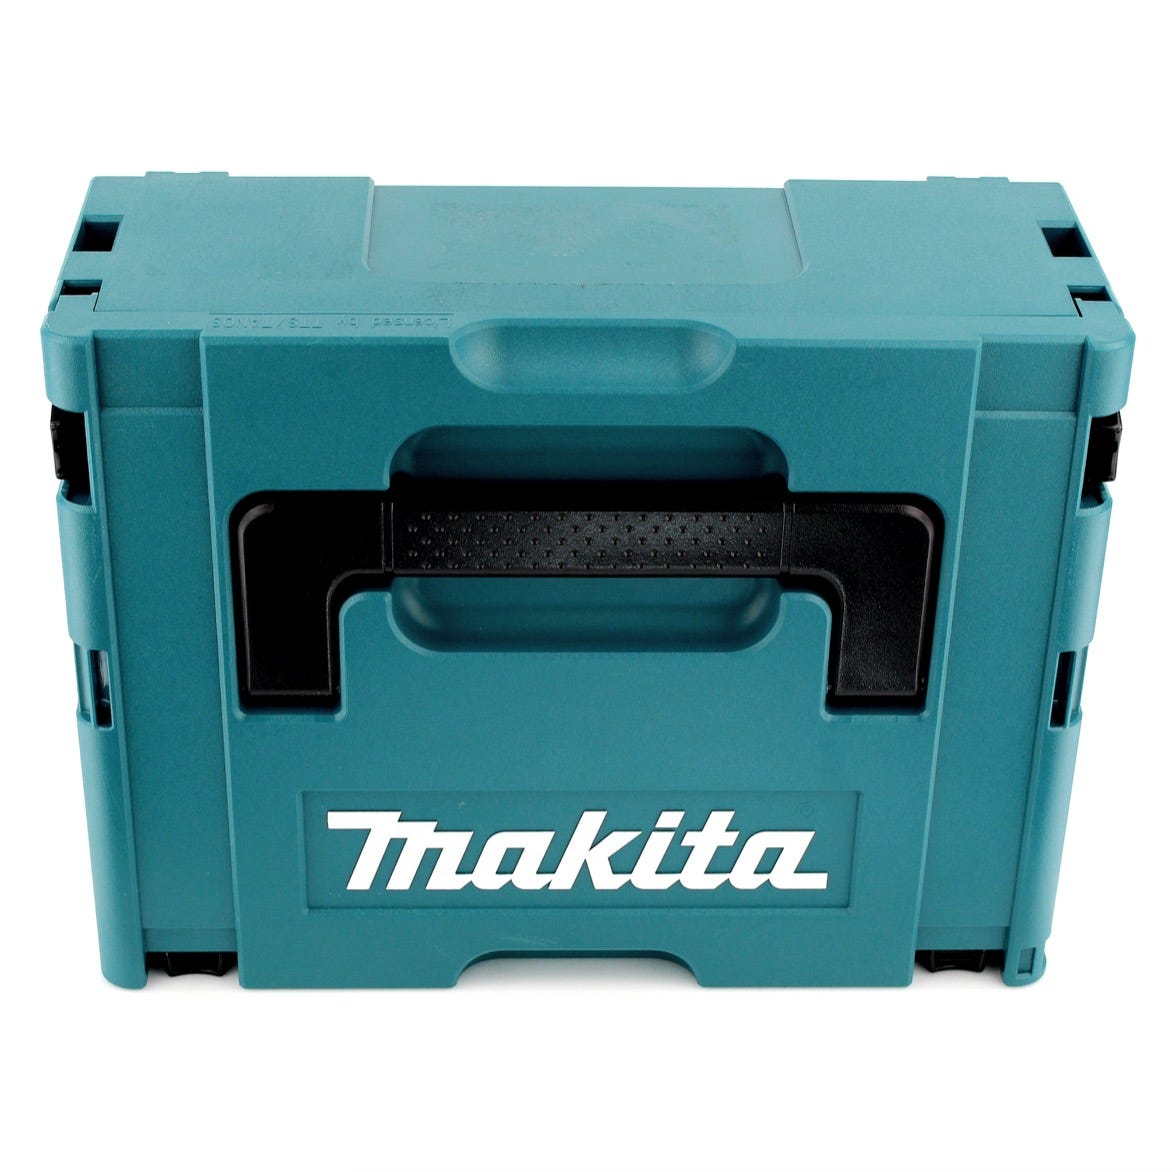 Makita DGD 800 ZJ 18 V Li-Ion Meuleuse droite sans fil en Coffret Makpac - sans Batterie ni Chargeur 2